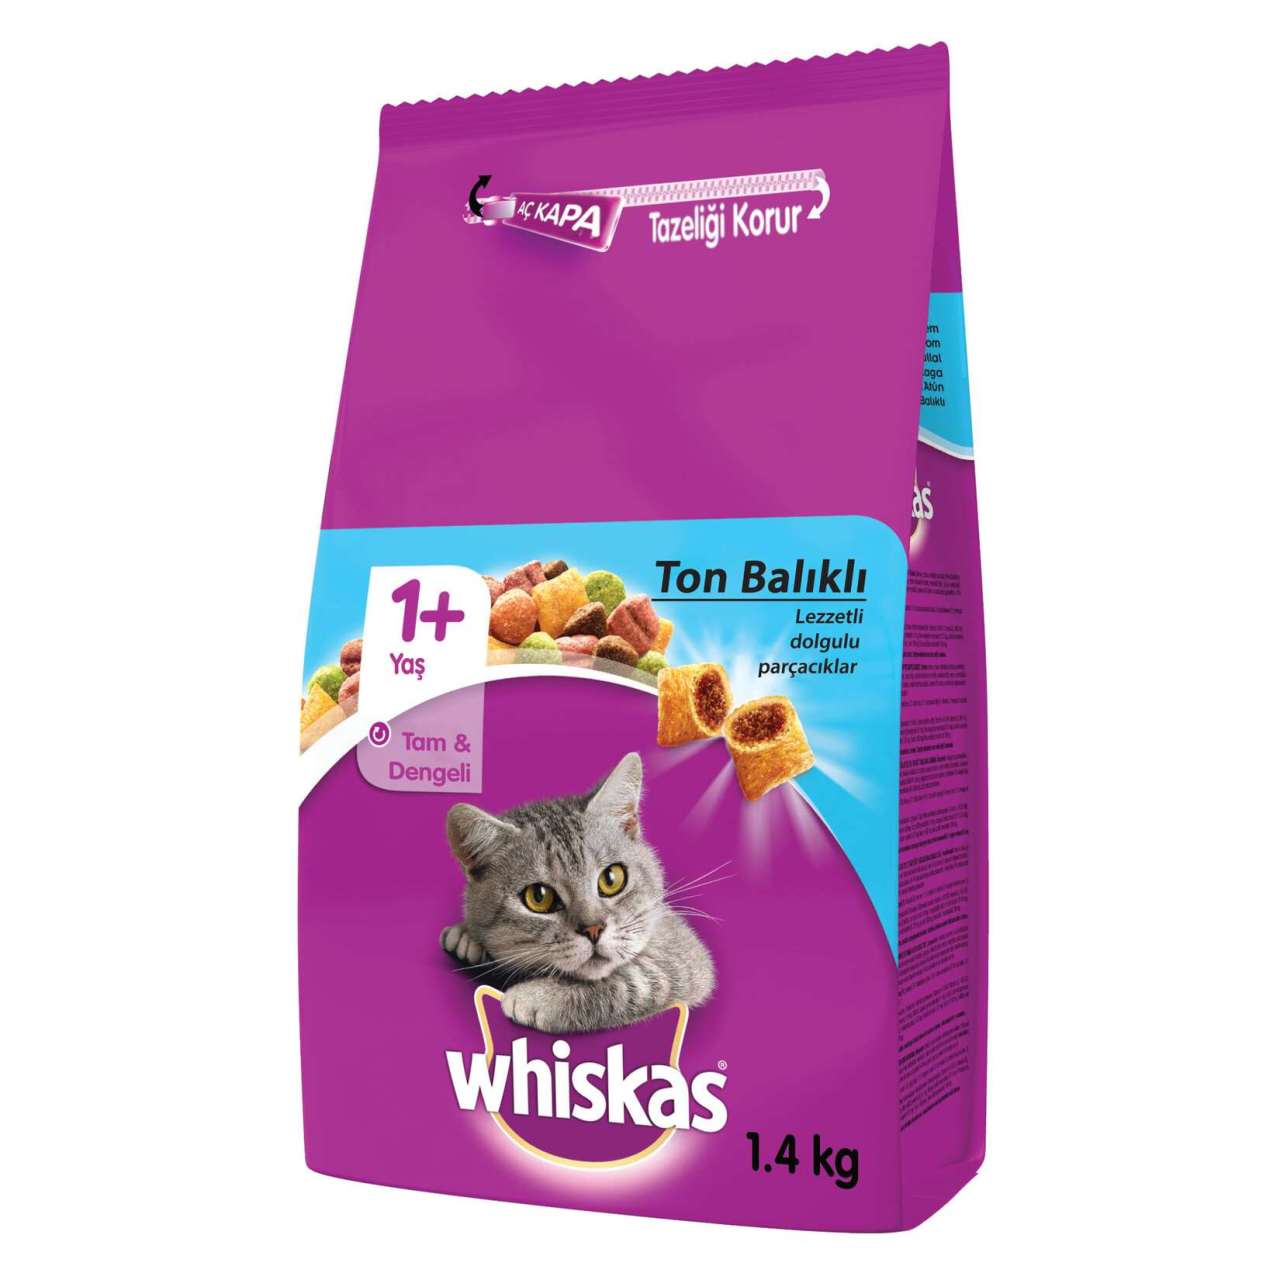 Whiskas Ton Balıklı Kuru Kedi Maması 1.4 kg (stt.11/2024)